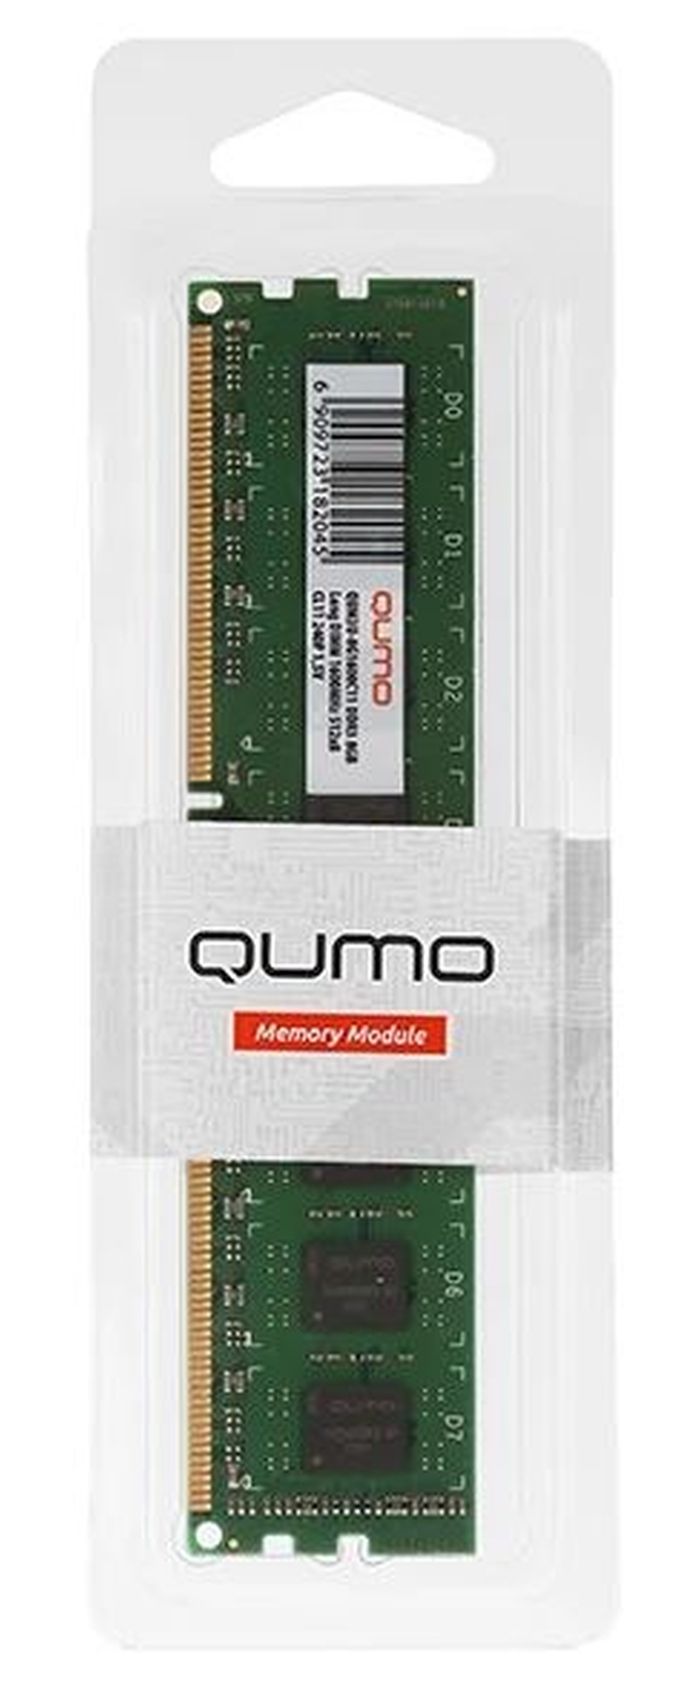 Оперативная память QUMO DDR3 DIMM 4GB 1333MHz (QUM3U-4G1333C9) память оперативная ddr3 qumo 8gb 1600mhz qum3u 8g1600c11l